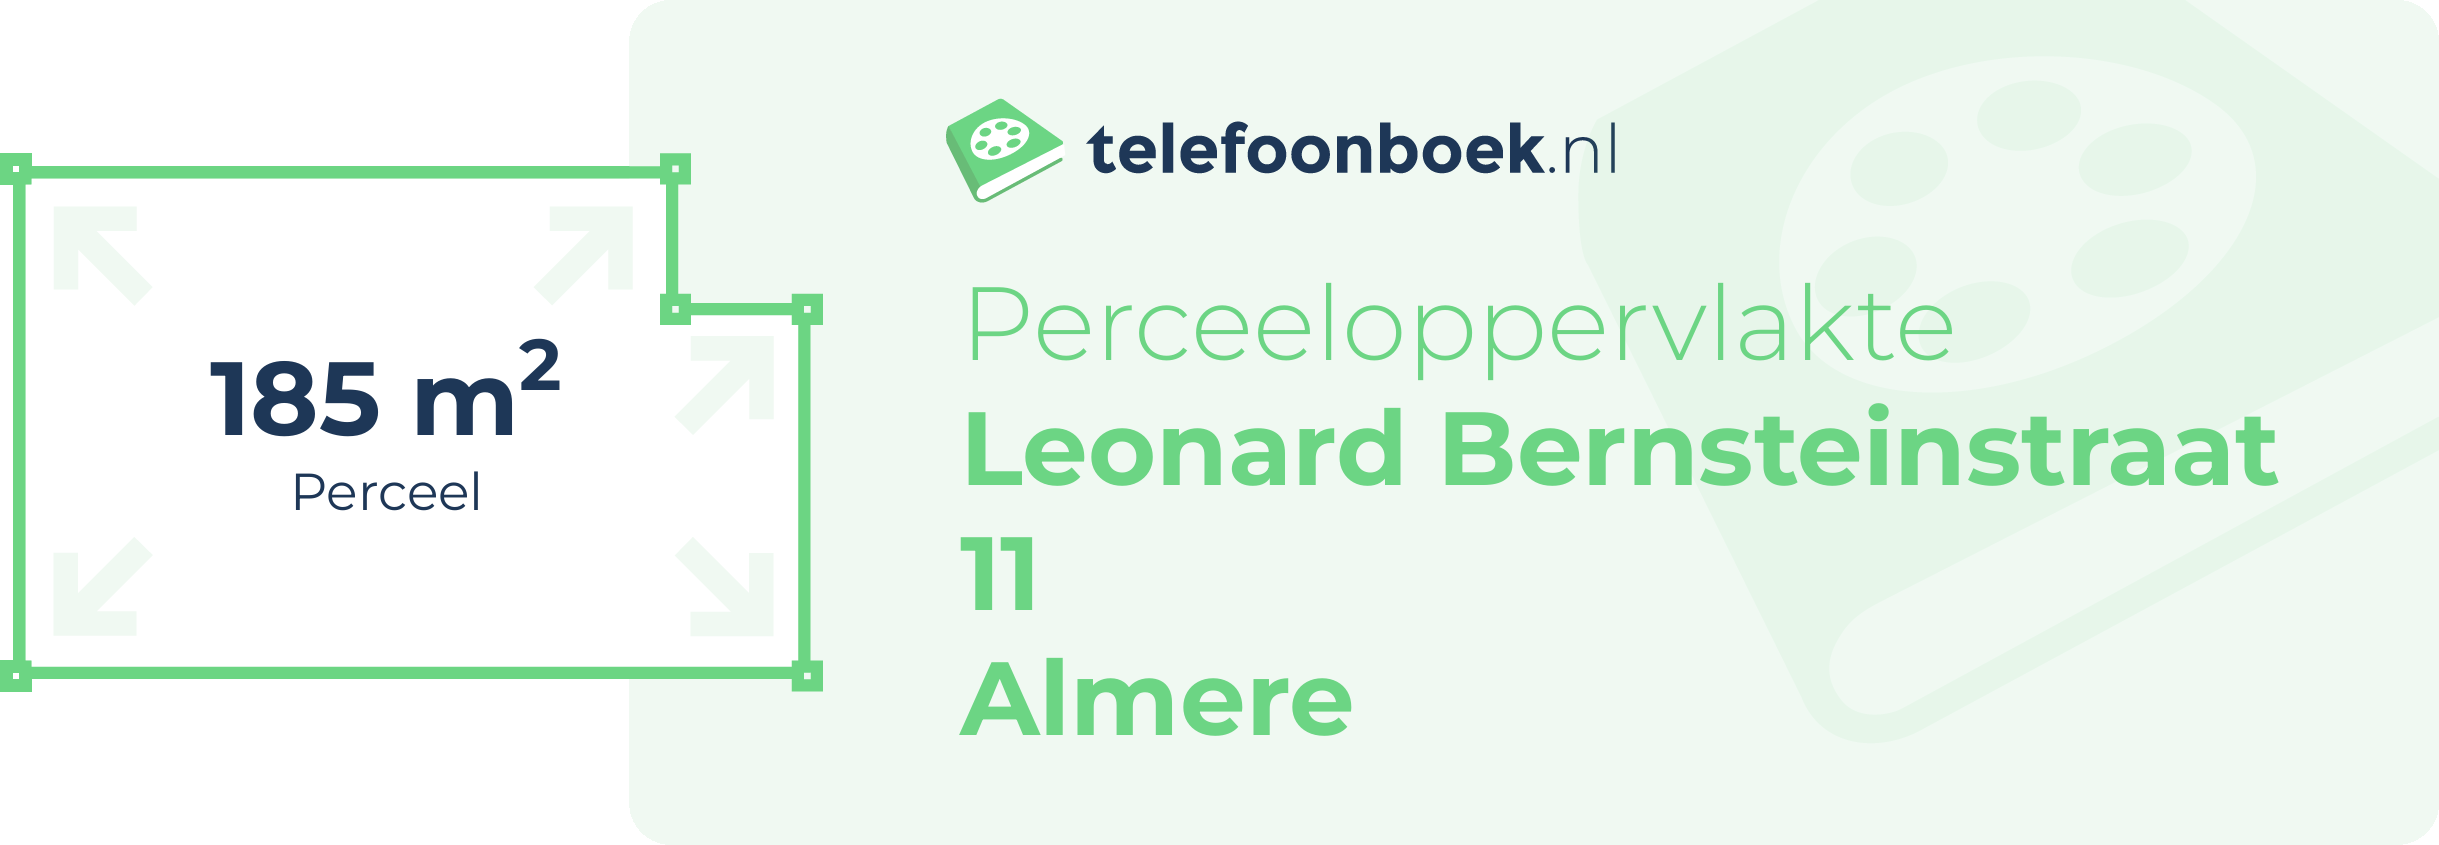 Perceeloppervlakte Leonard Bernsteinstraat 11 Almere